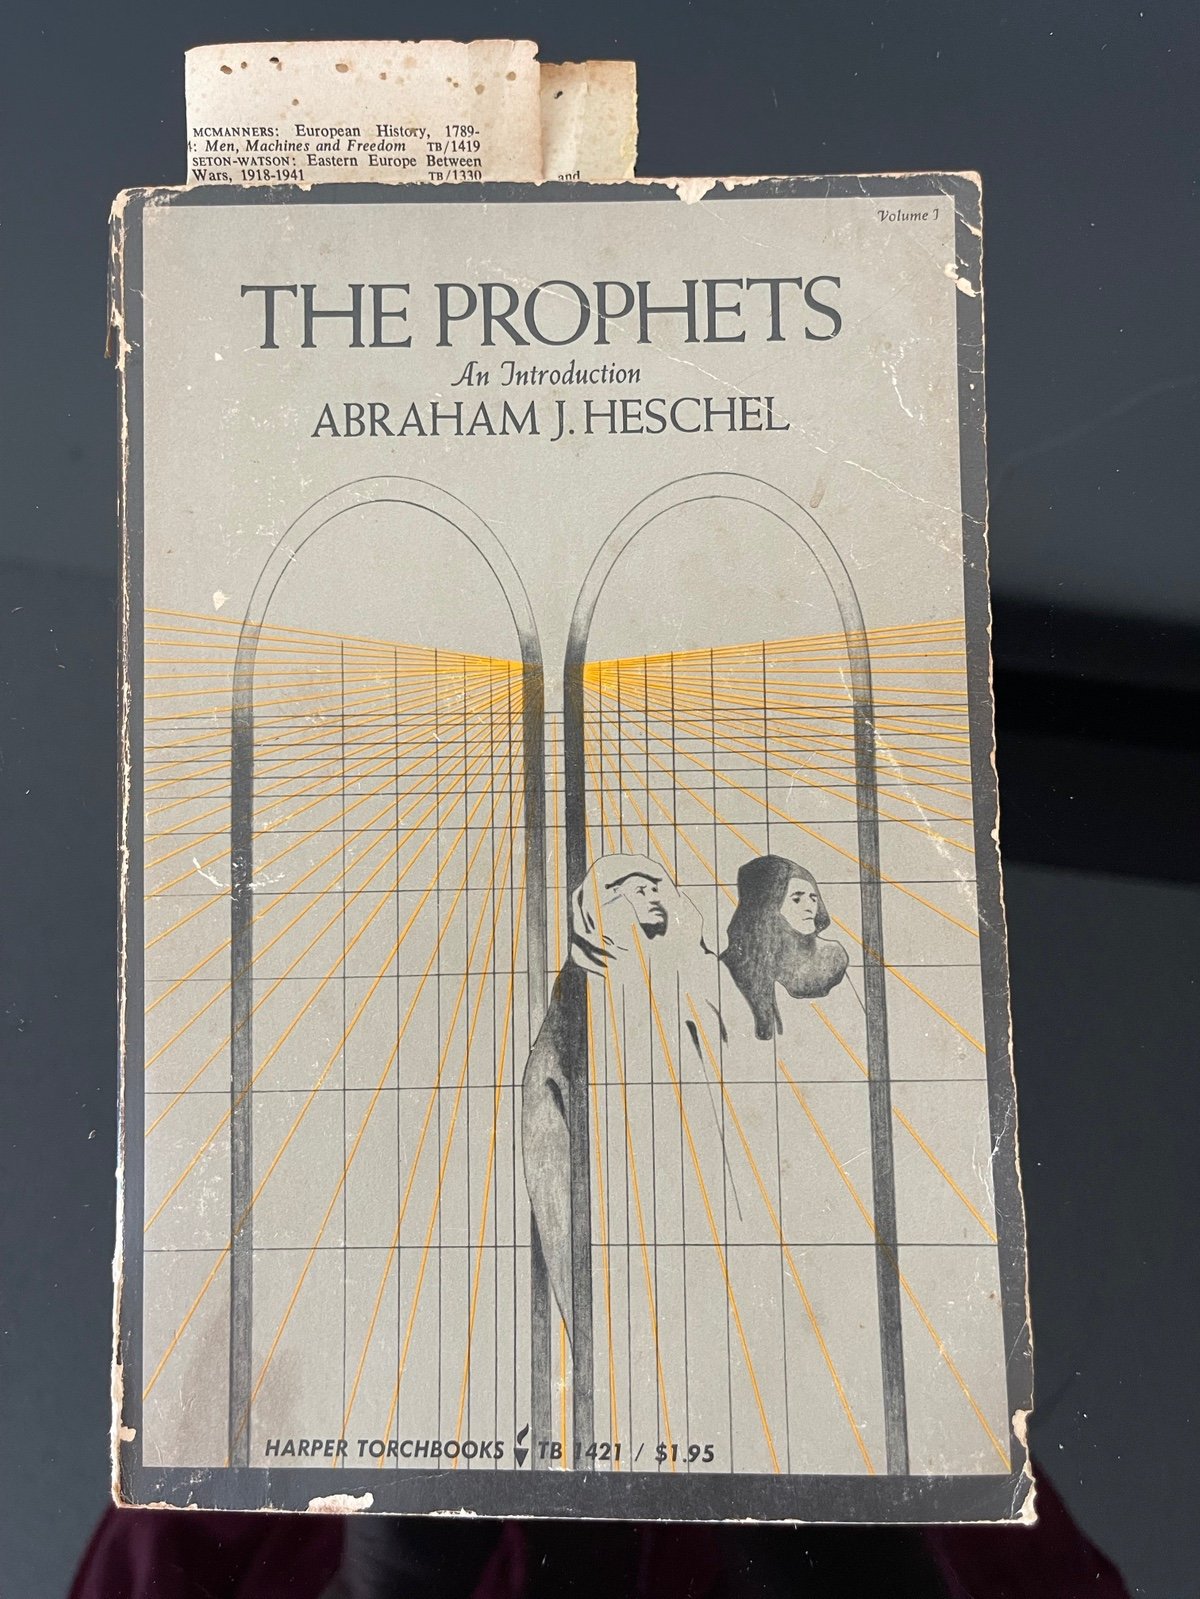 The Prophets Abraham J. Heschel eonJuyyaD